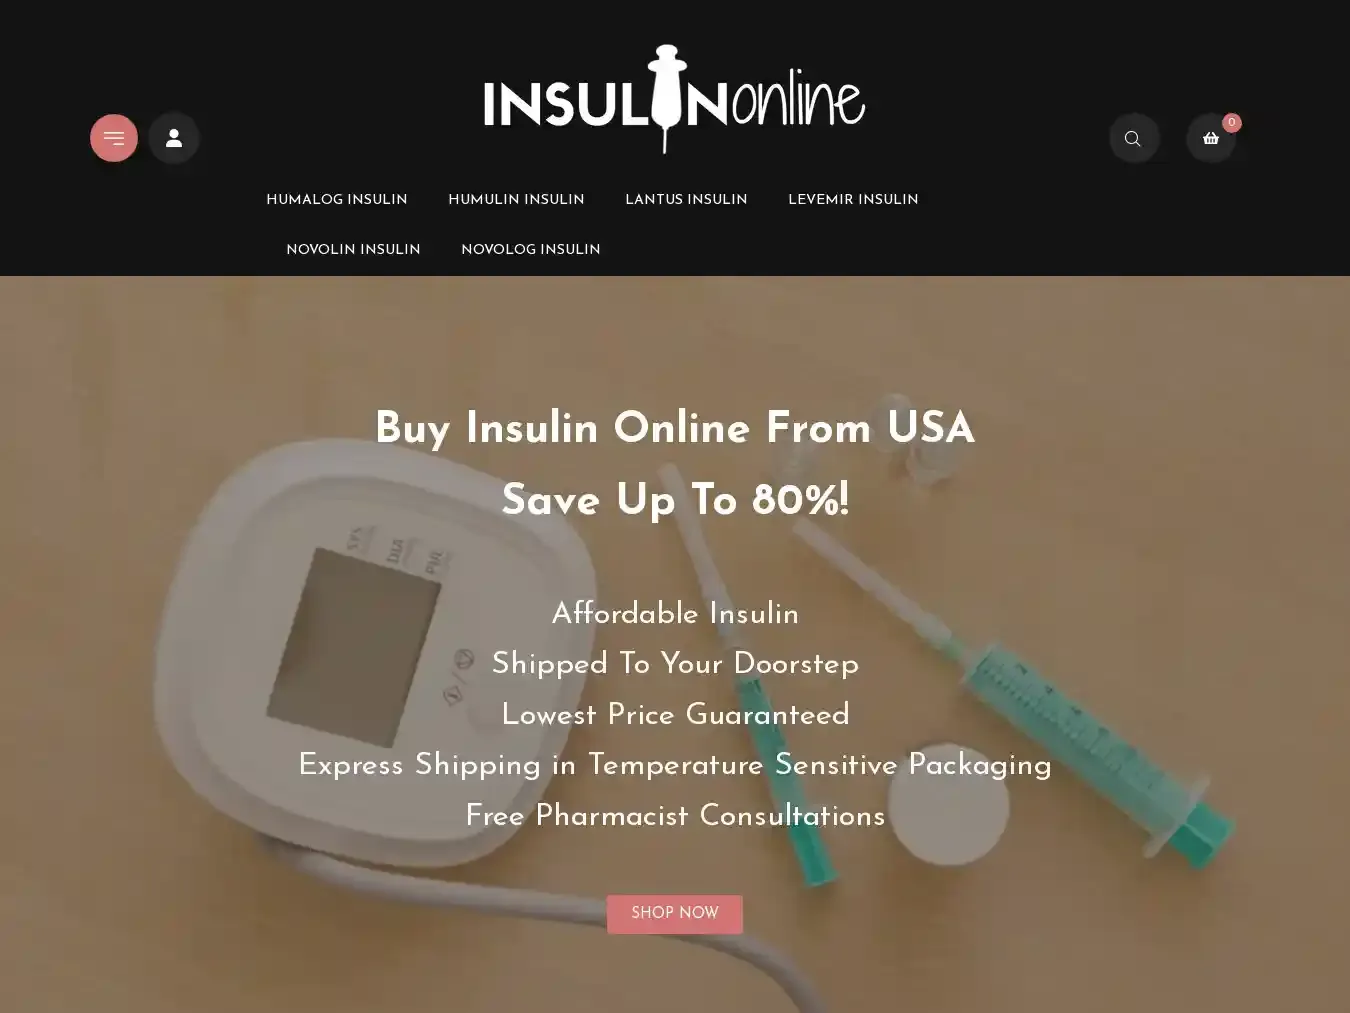 Insulinonlinestore.com Fraudulent Medical website.